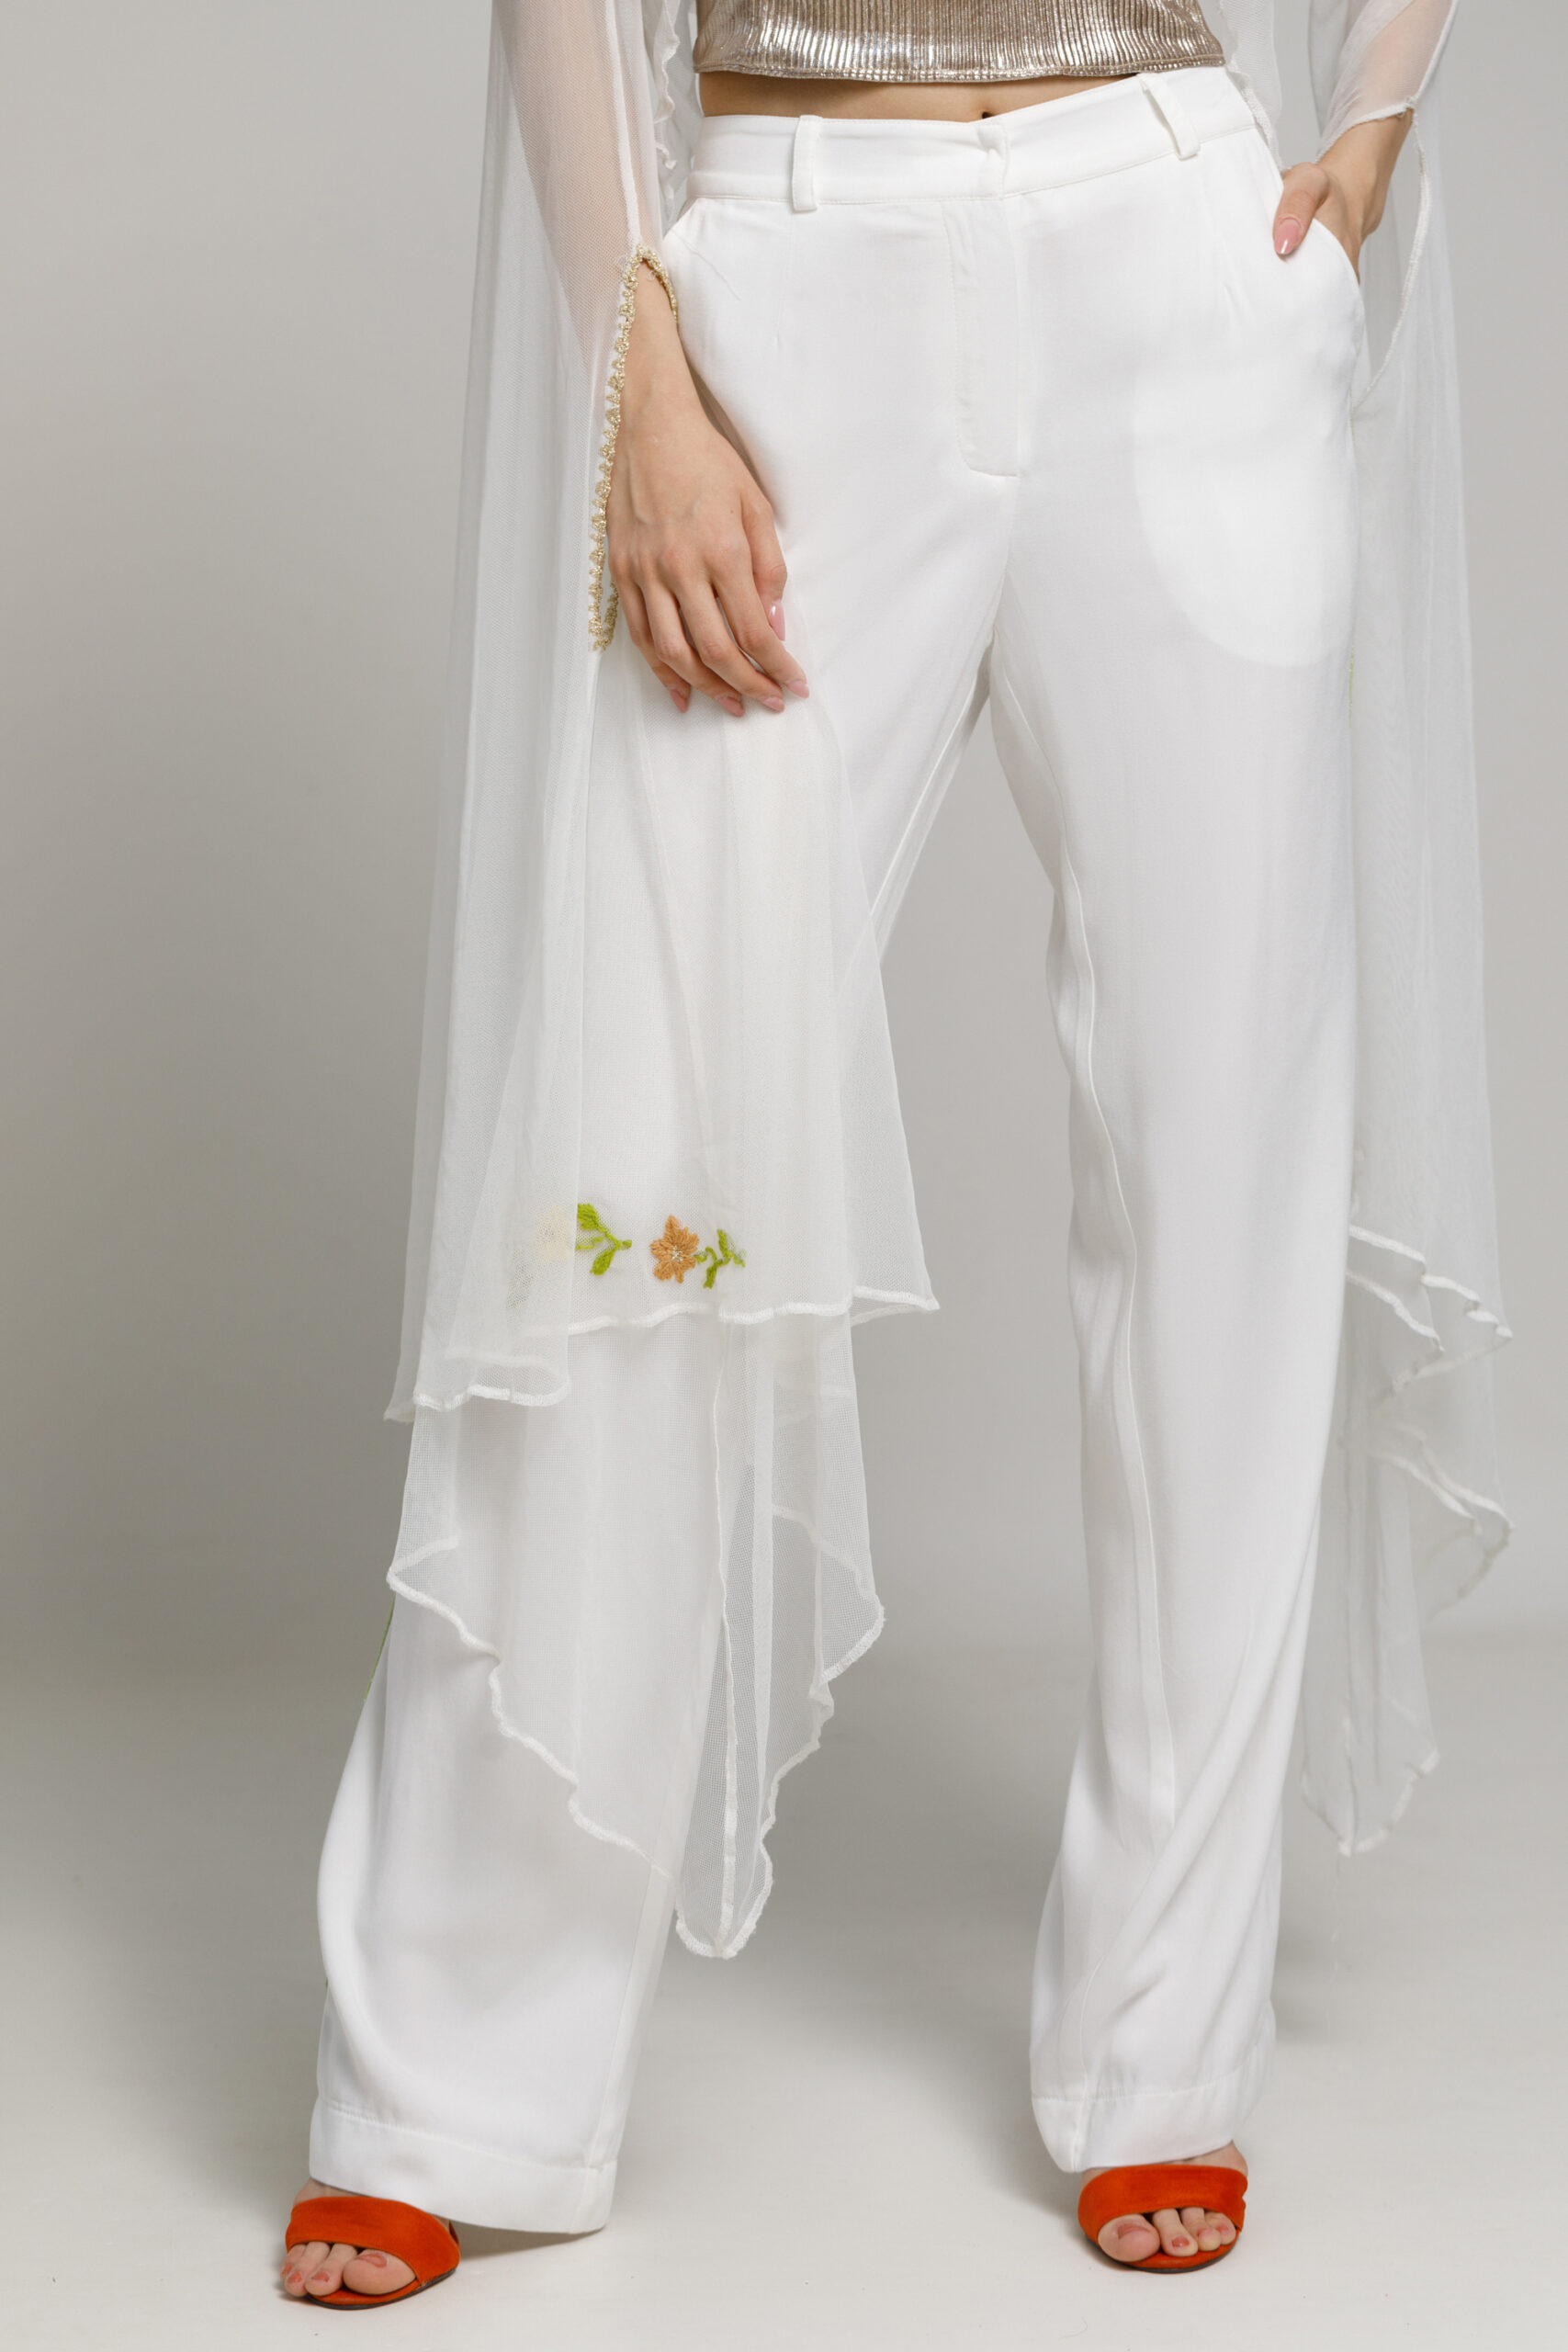 Pantalon GLADYS alb din viscoza. Materiale naturale, design unicat, cu broderie si aplicatii handmade